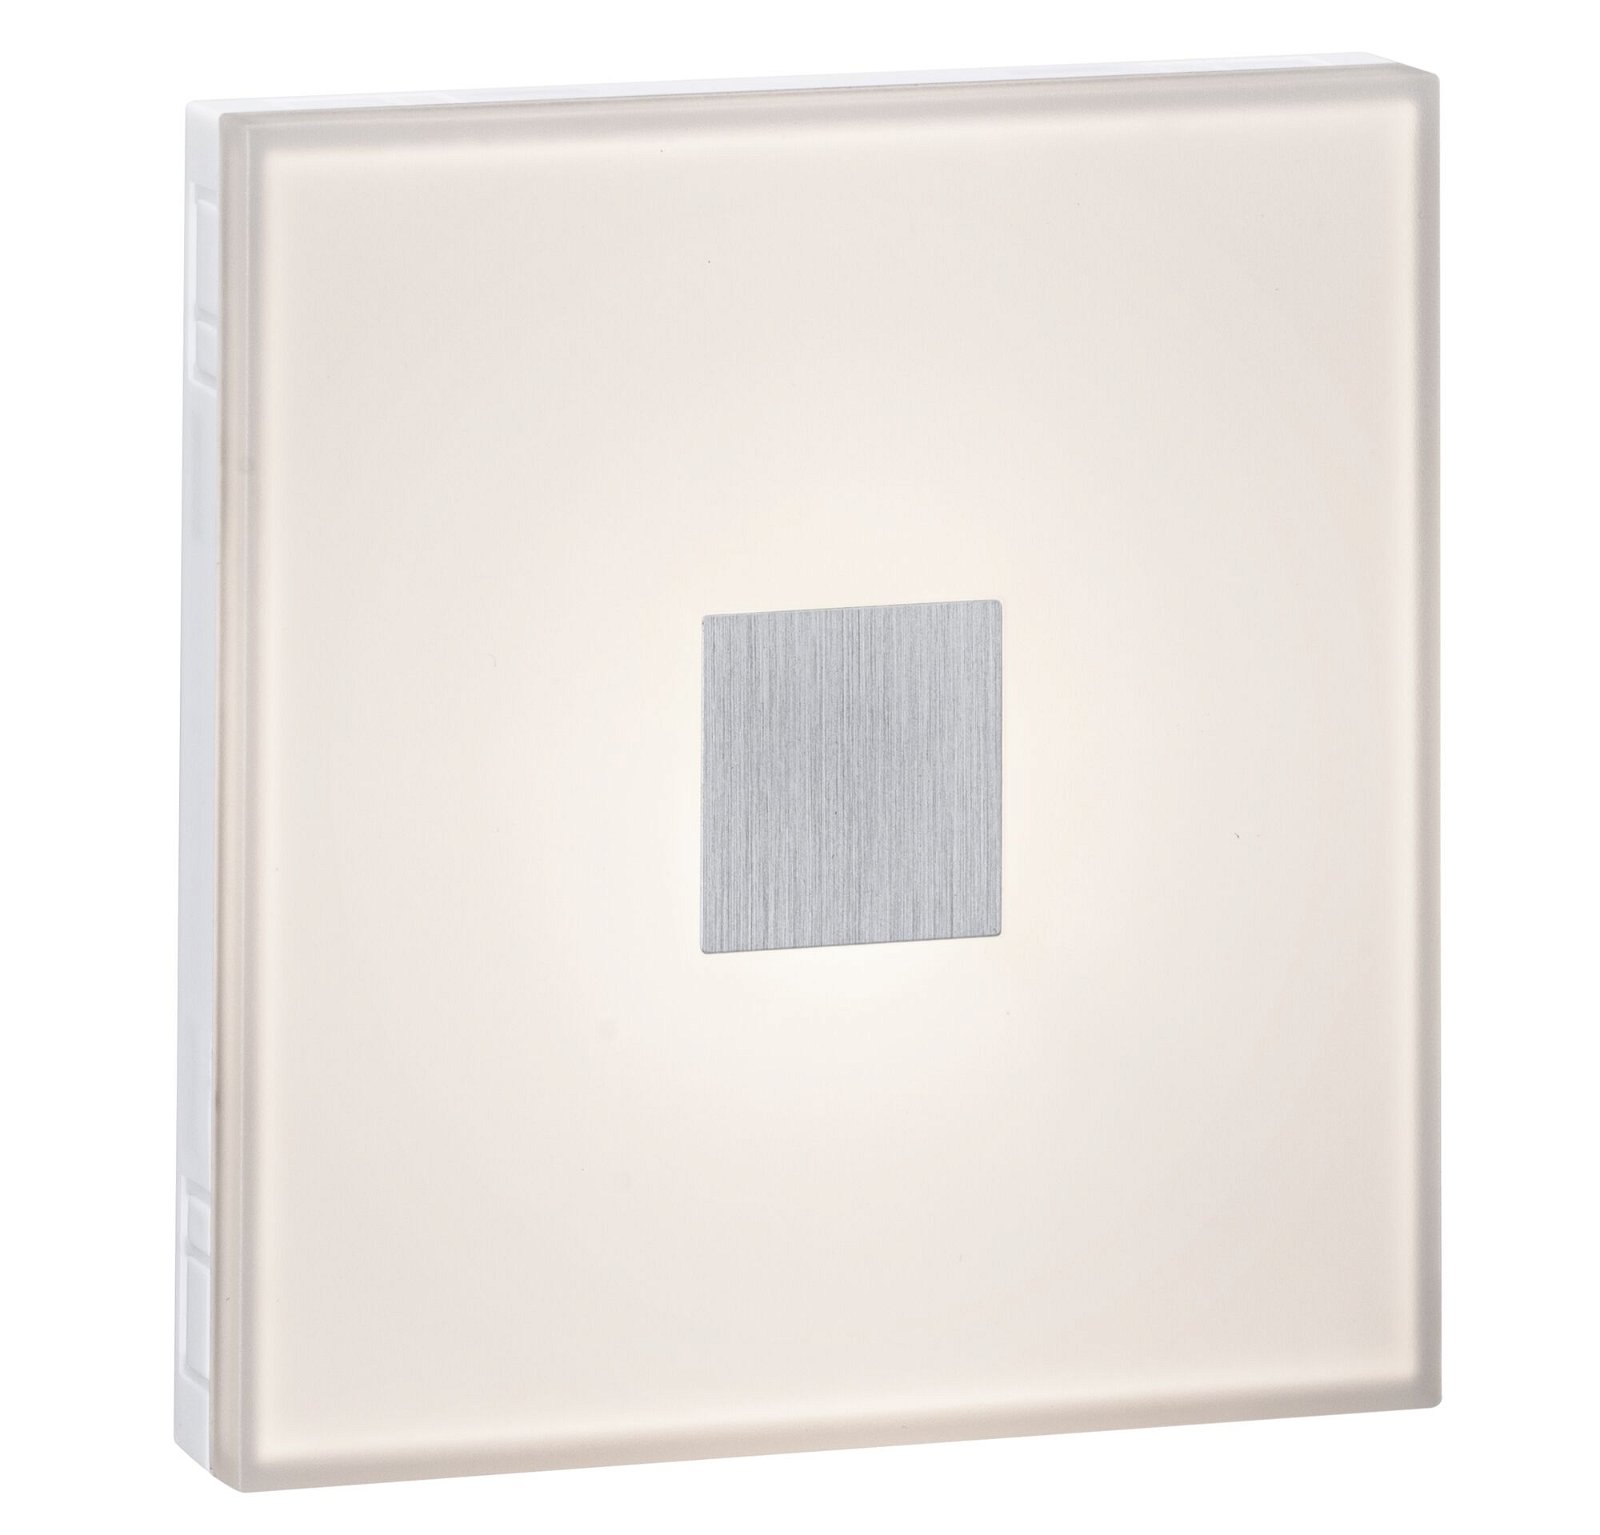 LumiTiles LED Tiles Square 2-piece set IP44 100x10mm 2x24lm 230/12V 2x0,75W dimmable RGBW White Plastic/Aluminium